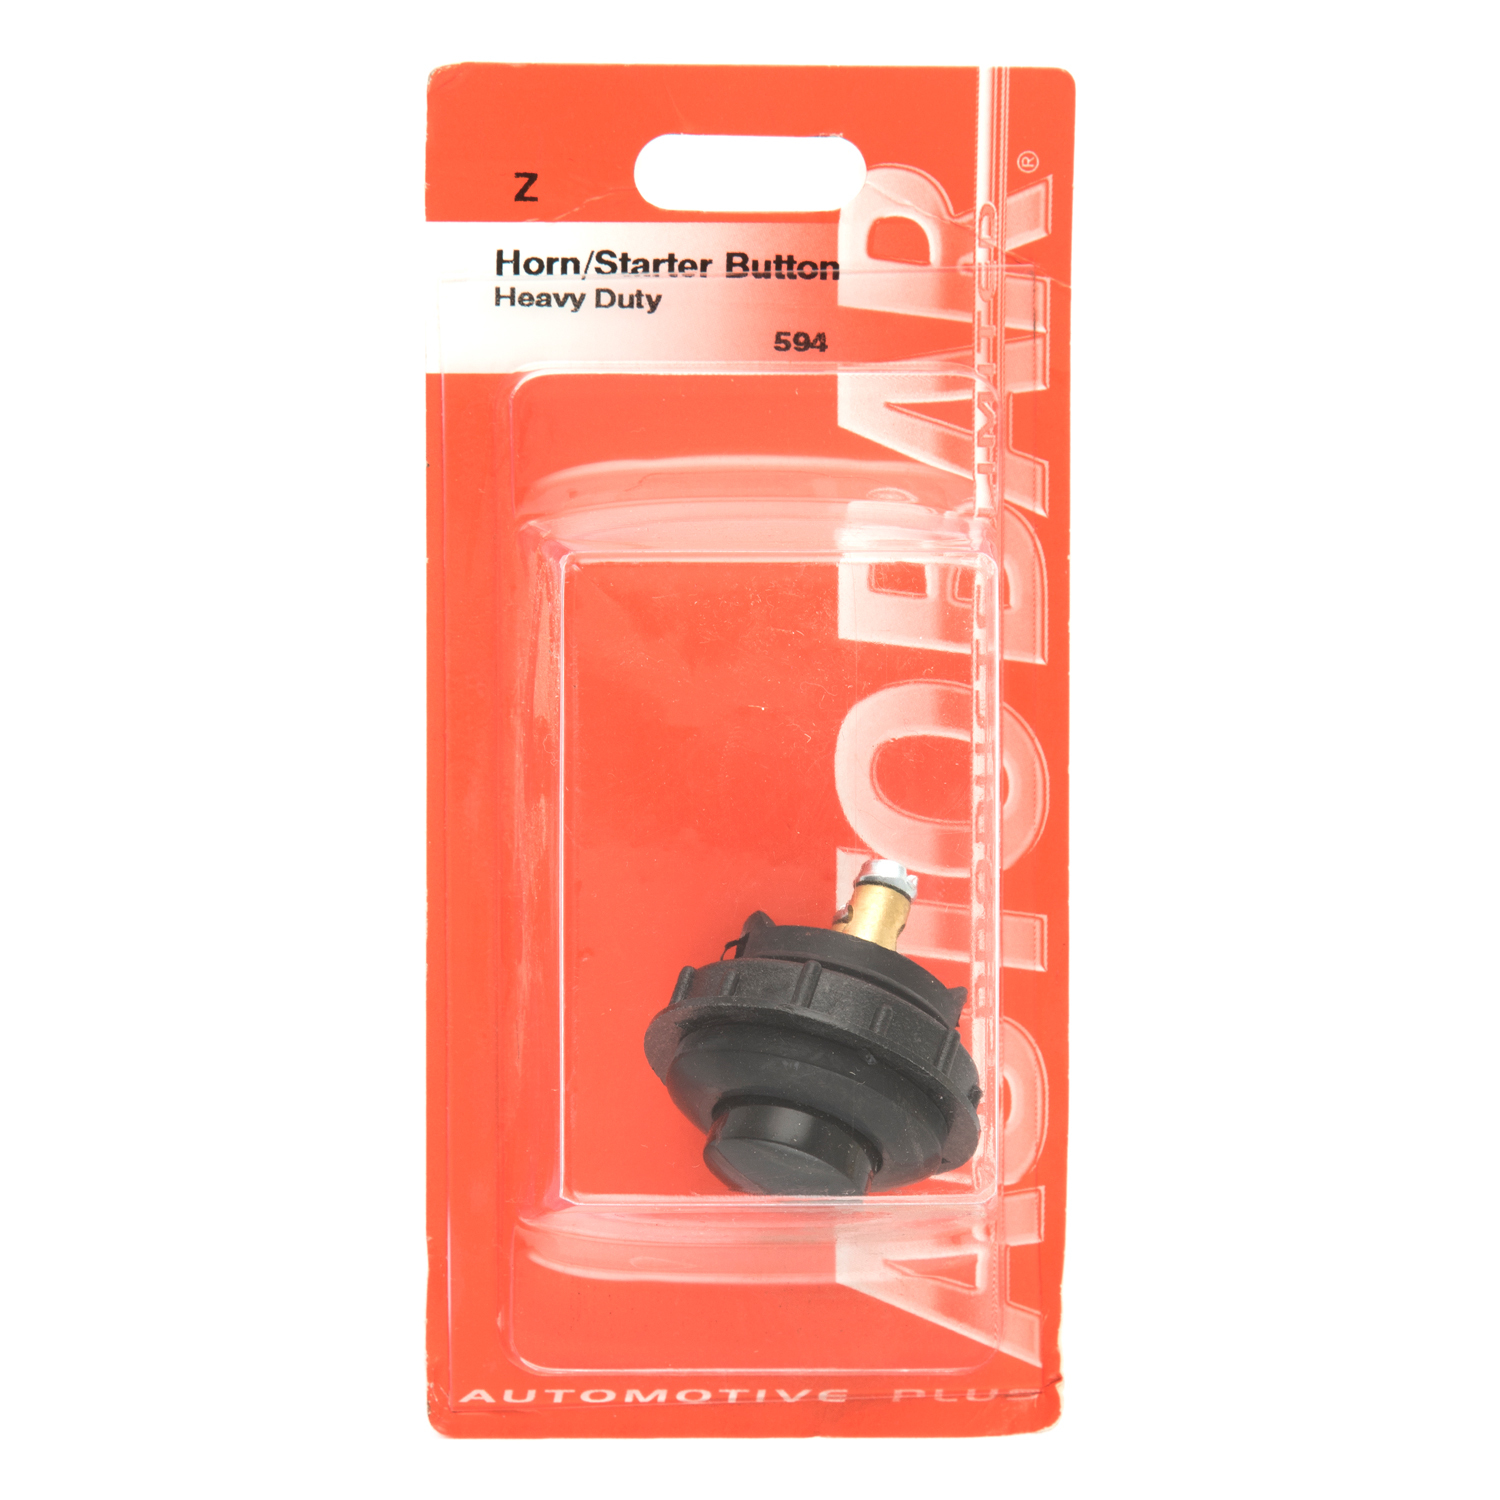 Autobar Heavy Duty Horn Starter Button Image